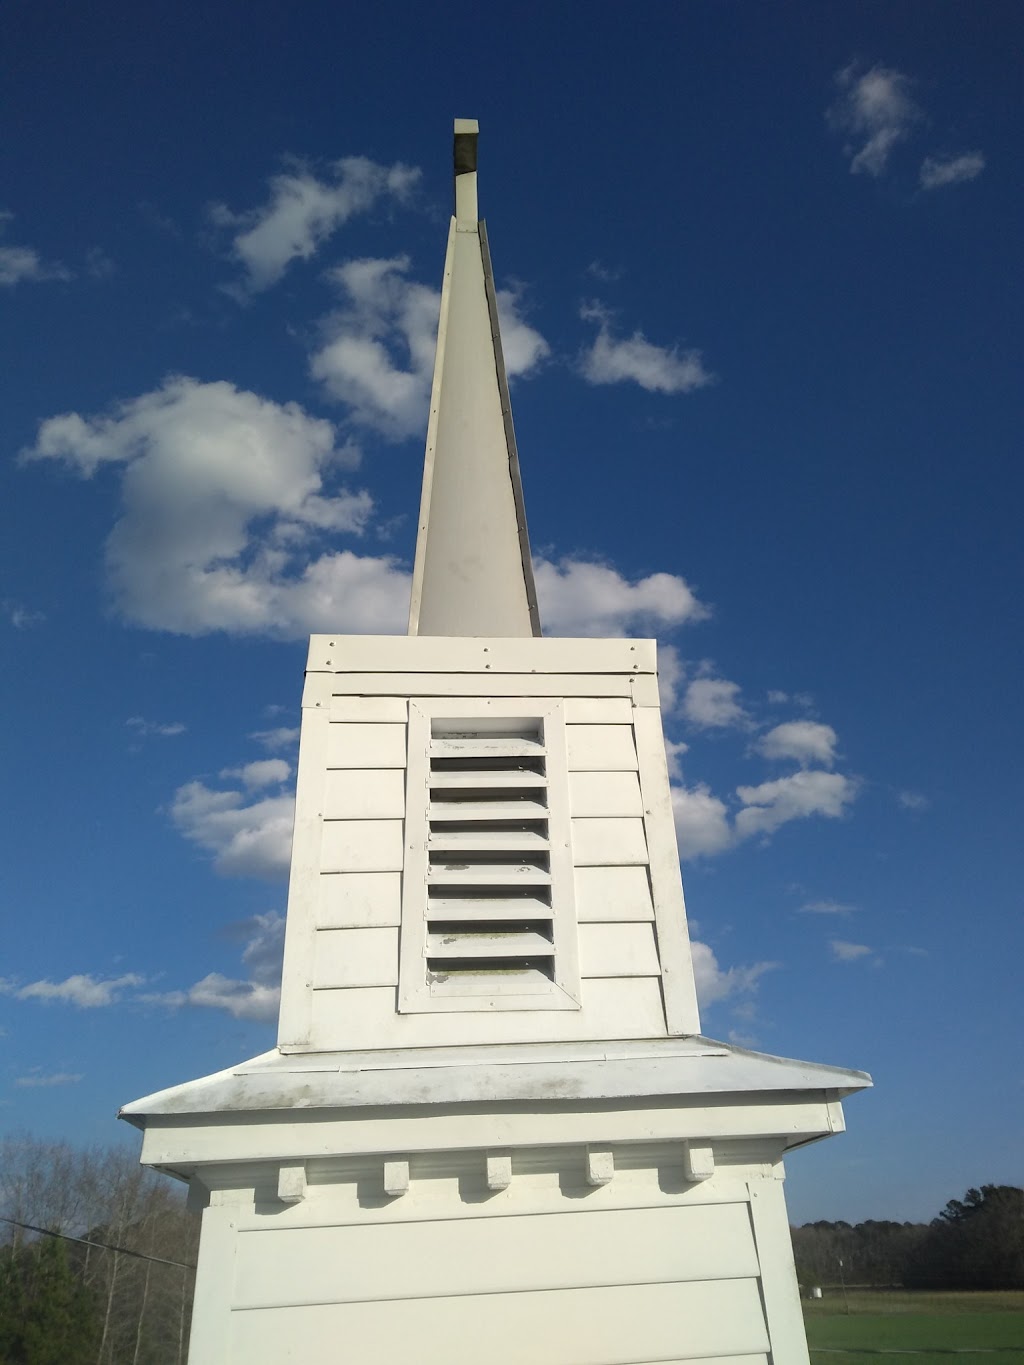 Pungo Church of God | 3572 Robinson Rd, Virginia Beach, VA 23456, USA | Phone: (757) 721-5189